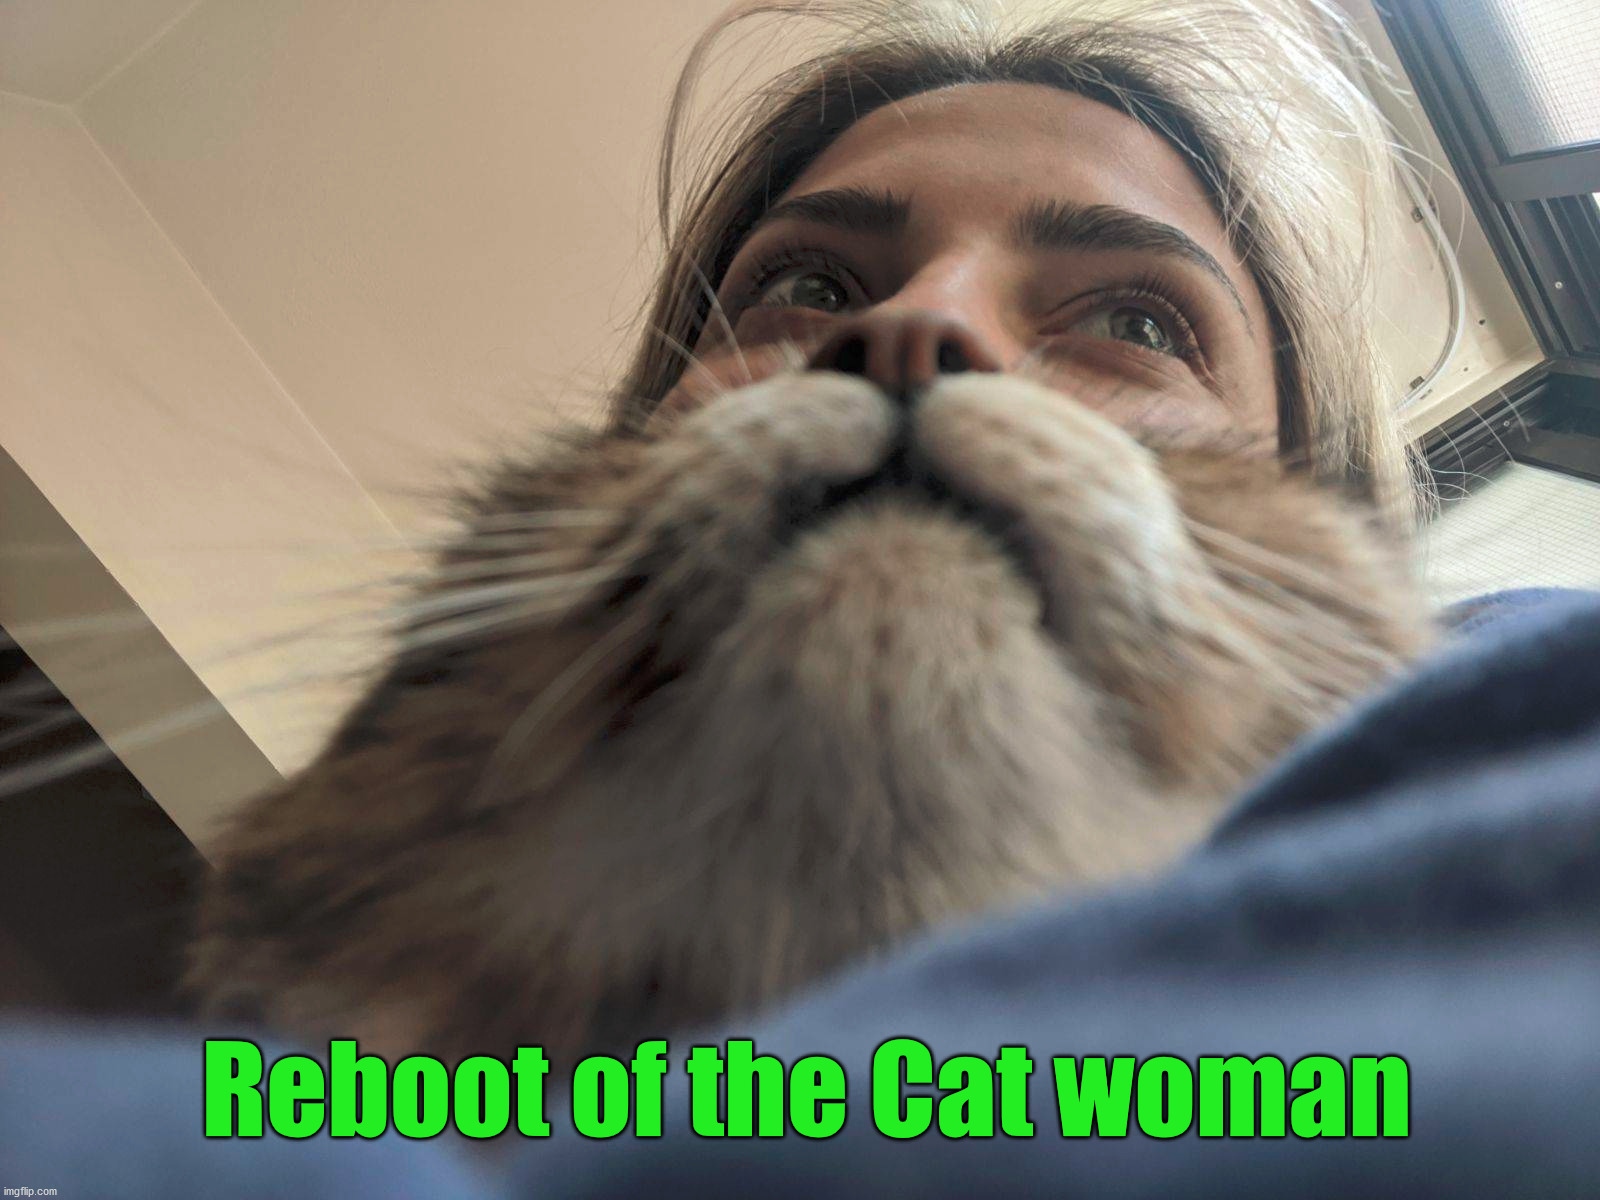 Reboot of the Cat woman | made w/ Imgflip meme maker